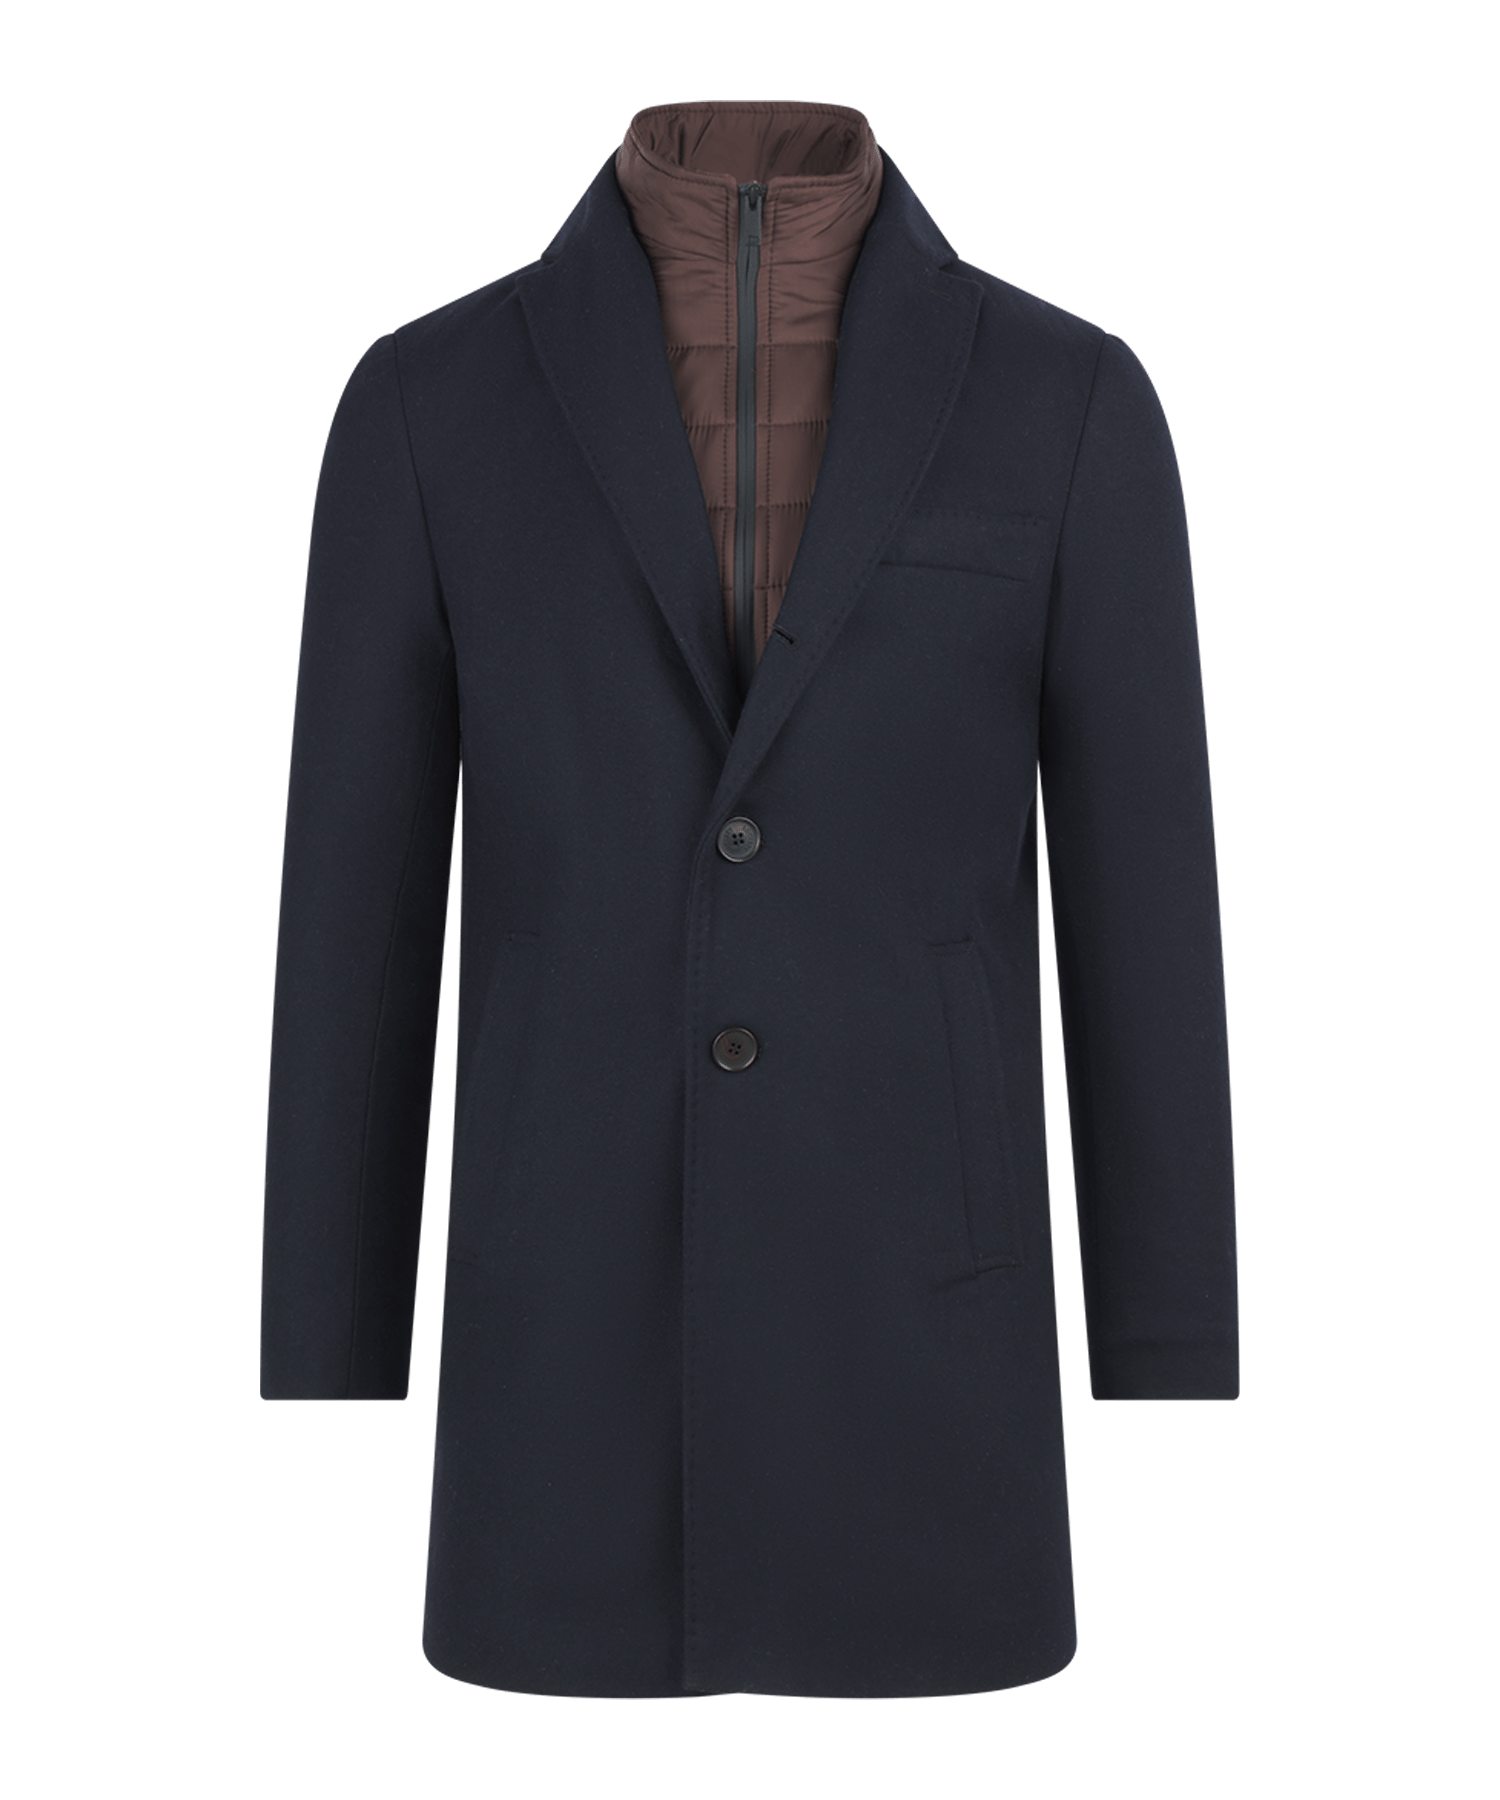 The Coat